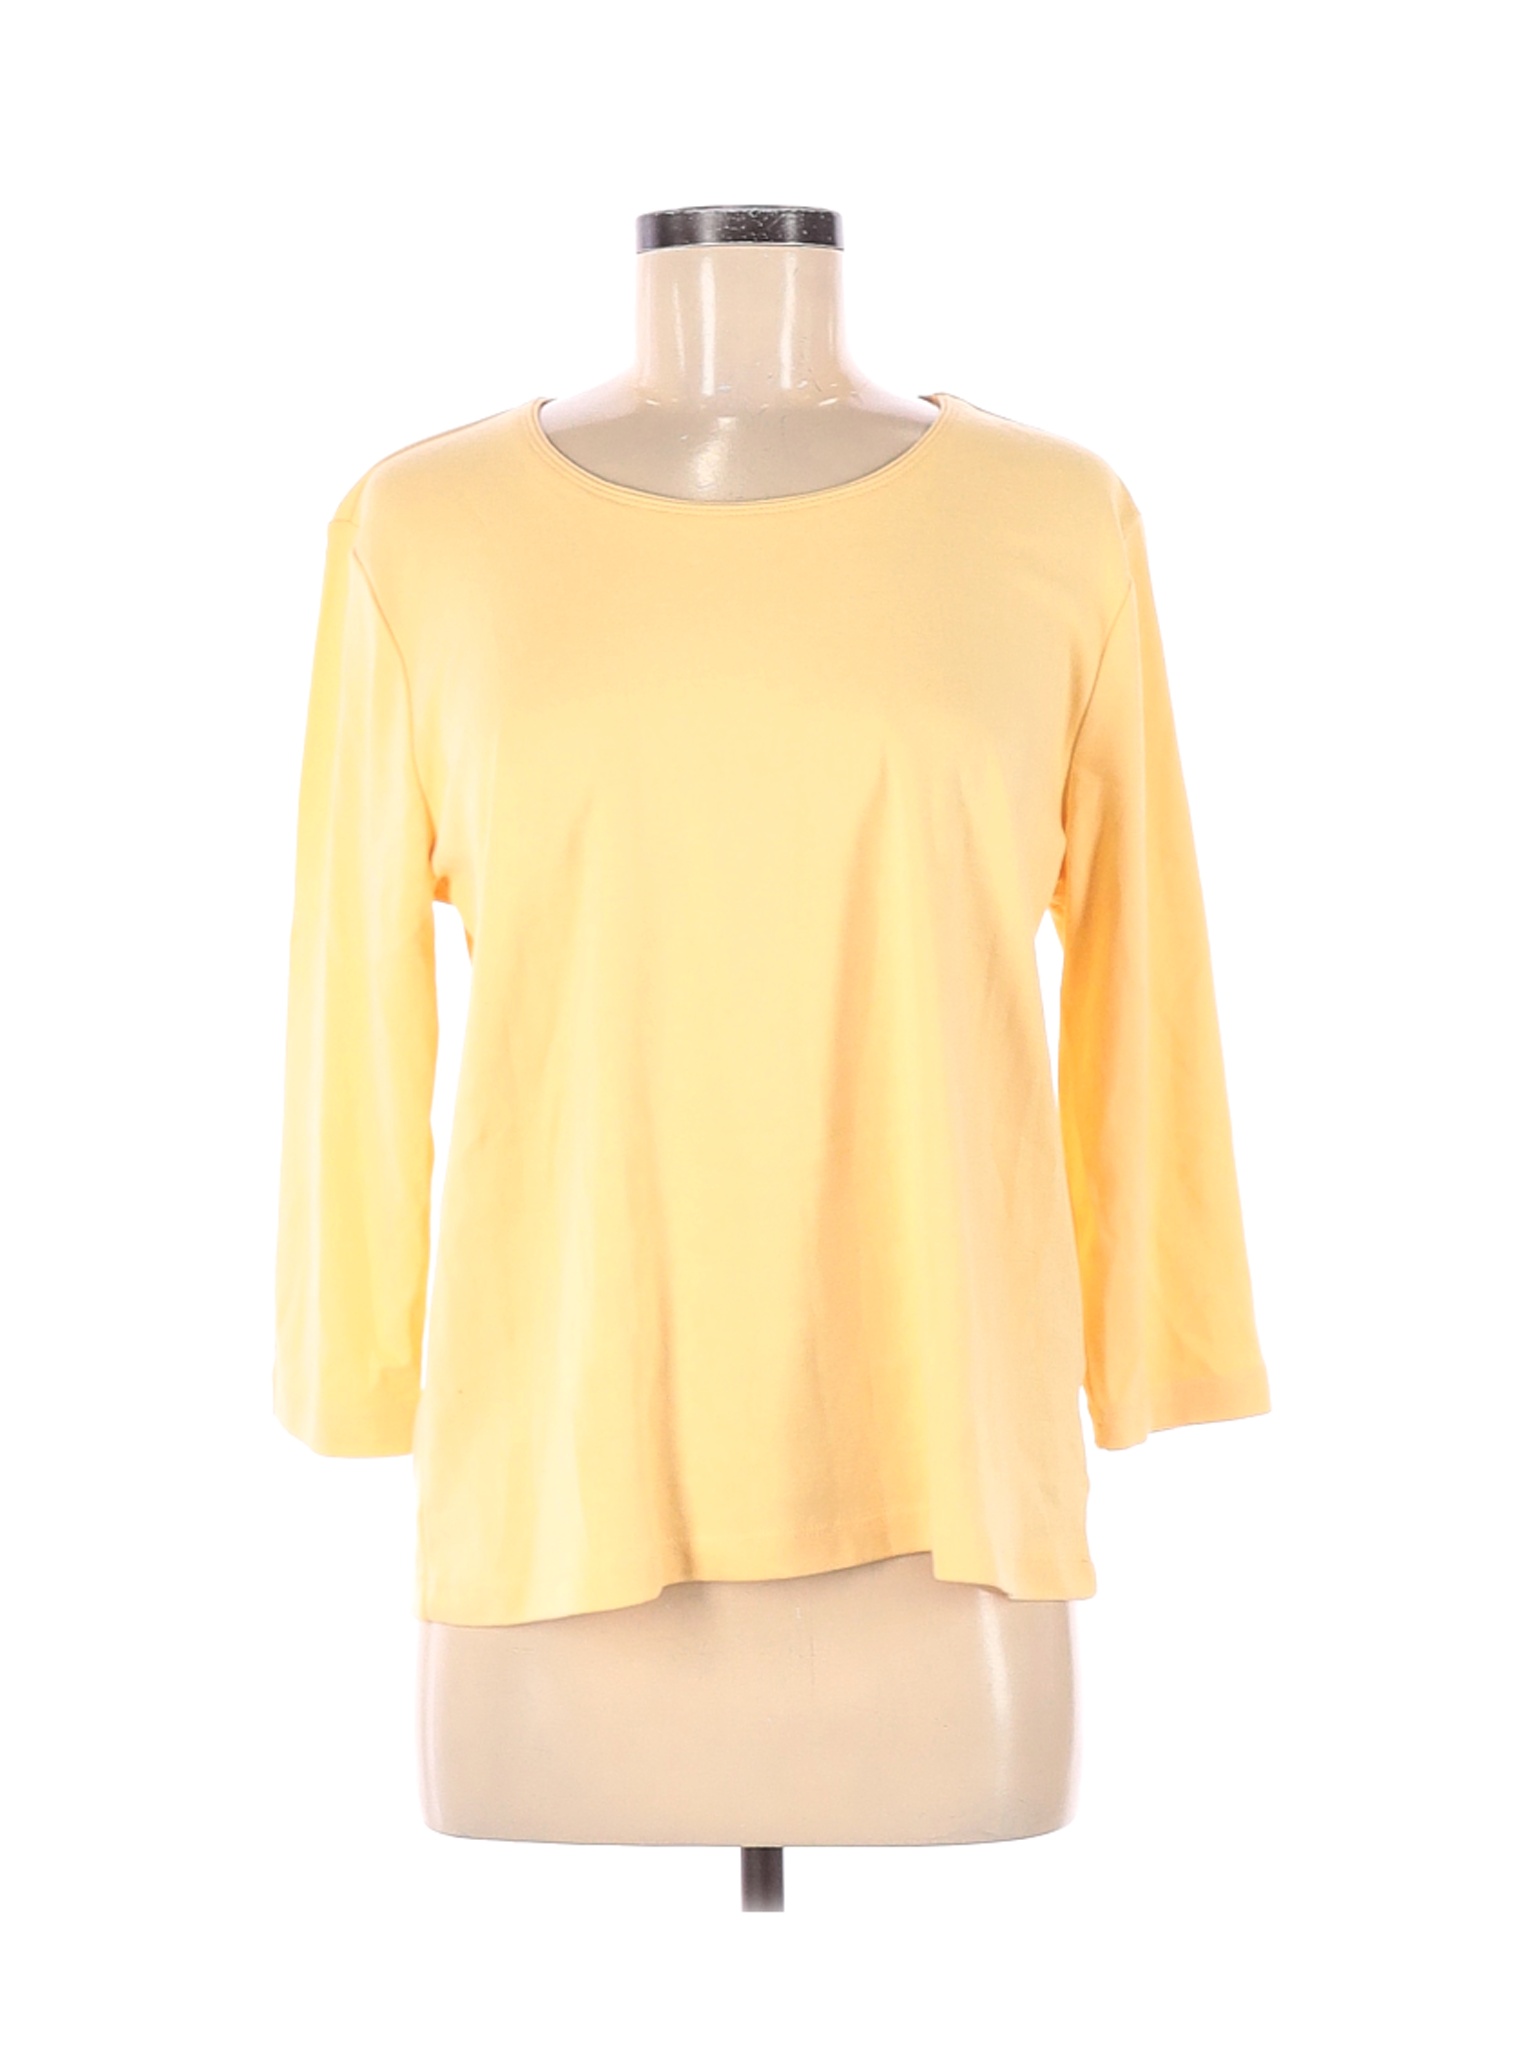 NWT Rebecca Malone Women Yellow Long Sleeve T-Shirt L | eBay